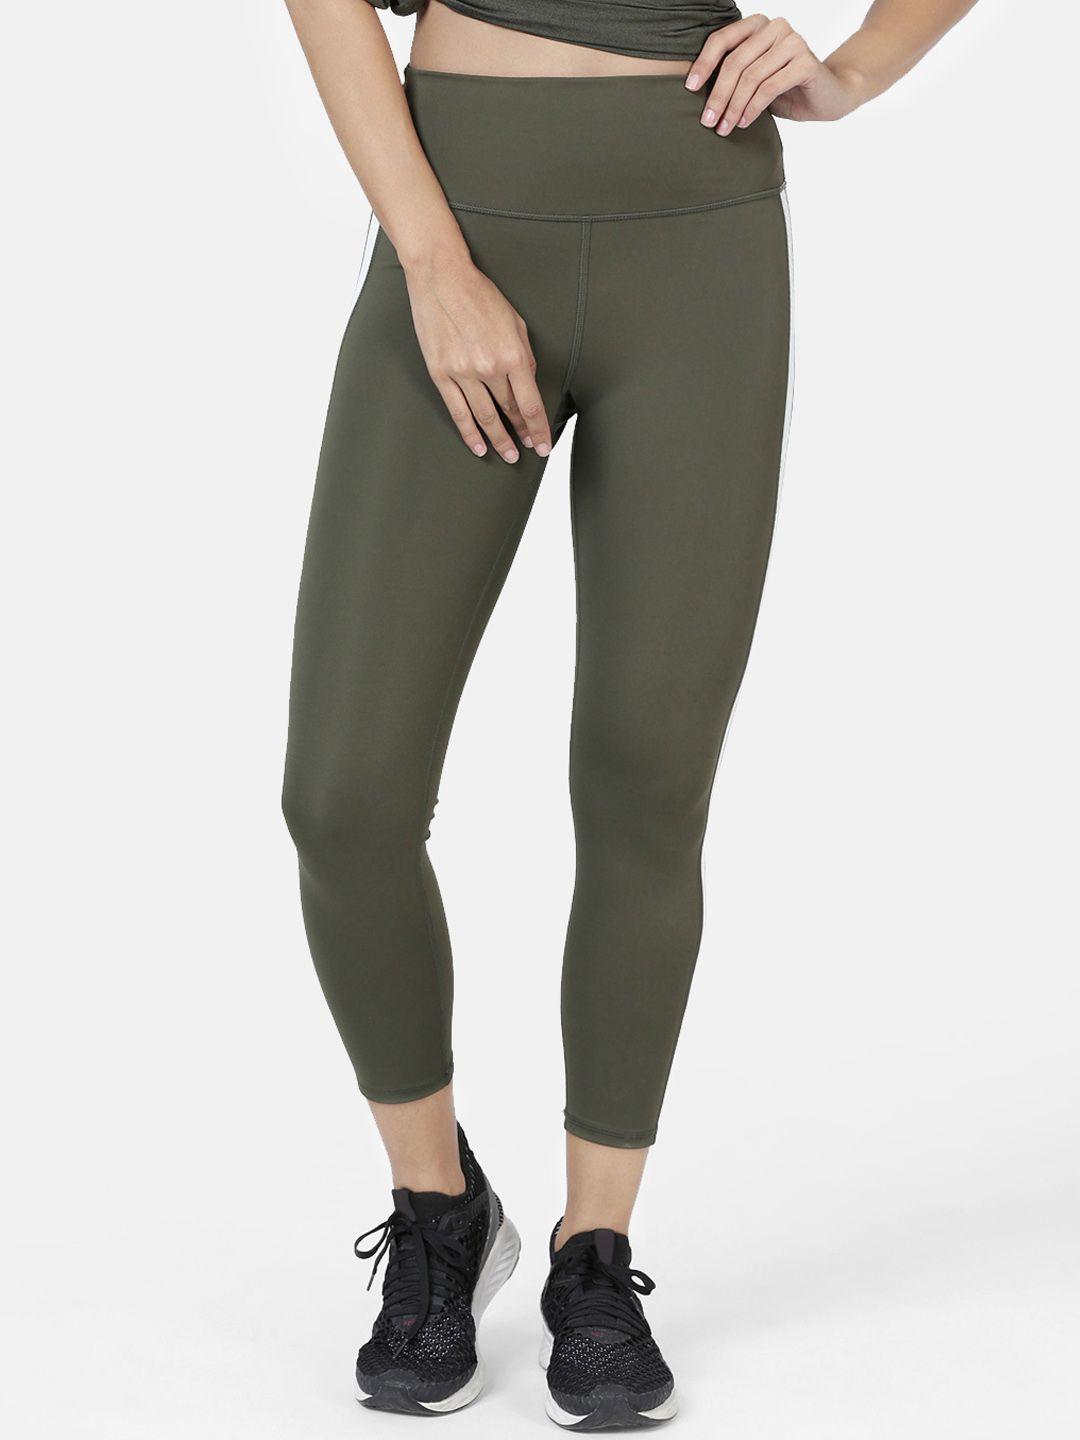 enamor women athleisure olive green solid  hugged fit gym training leggings tights